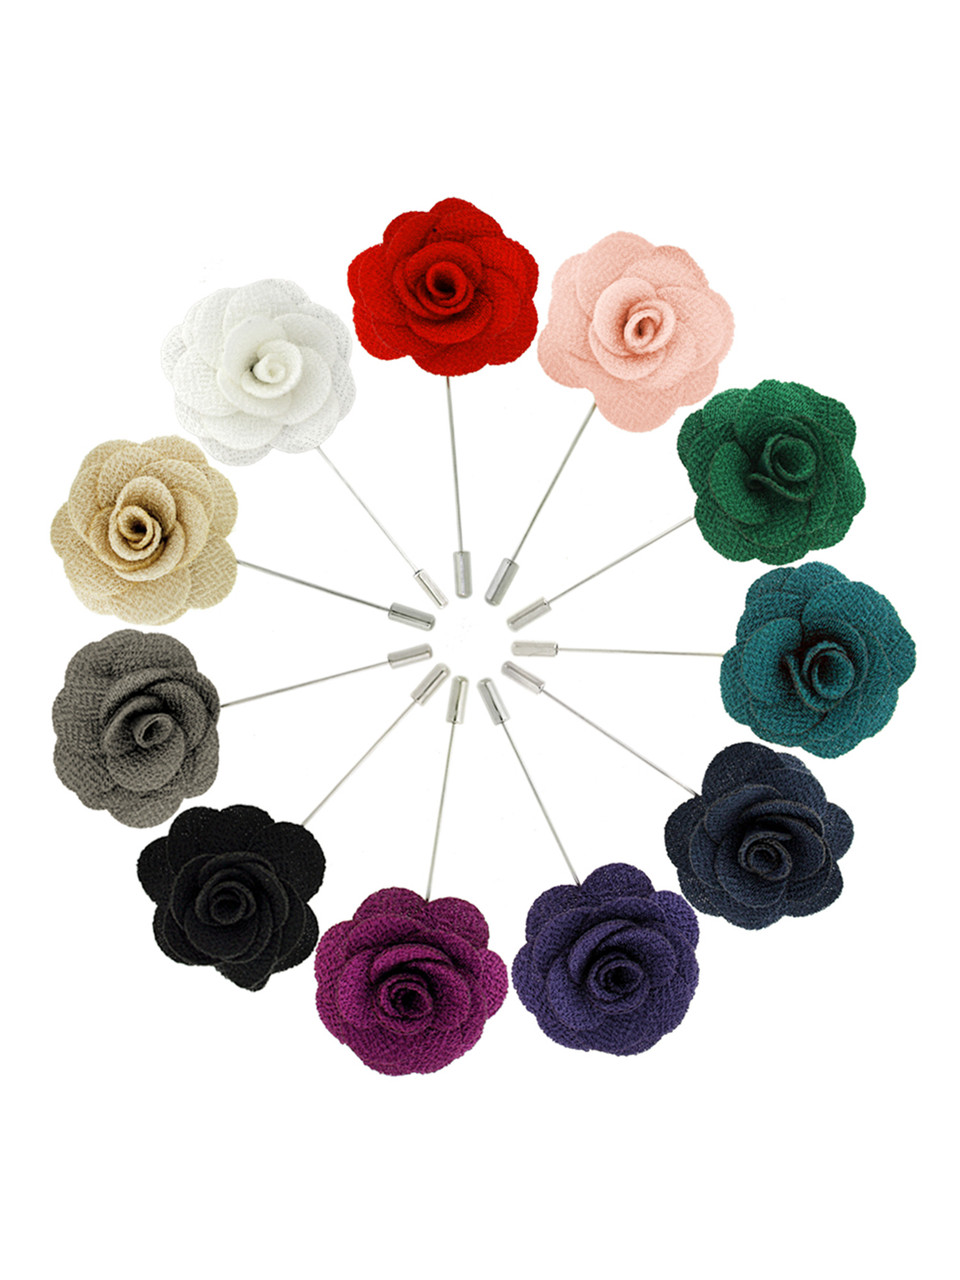 Textile fabric flower BROOCH for women, Pin Petal Flower Pin